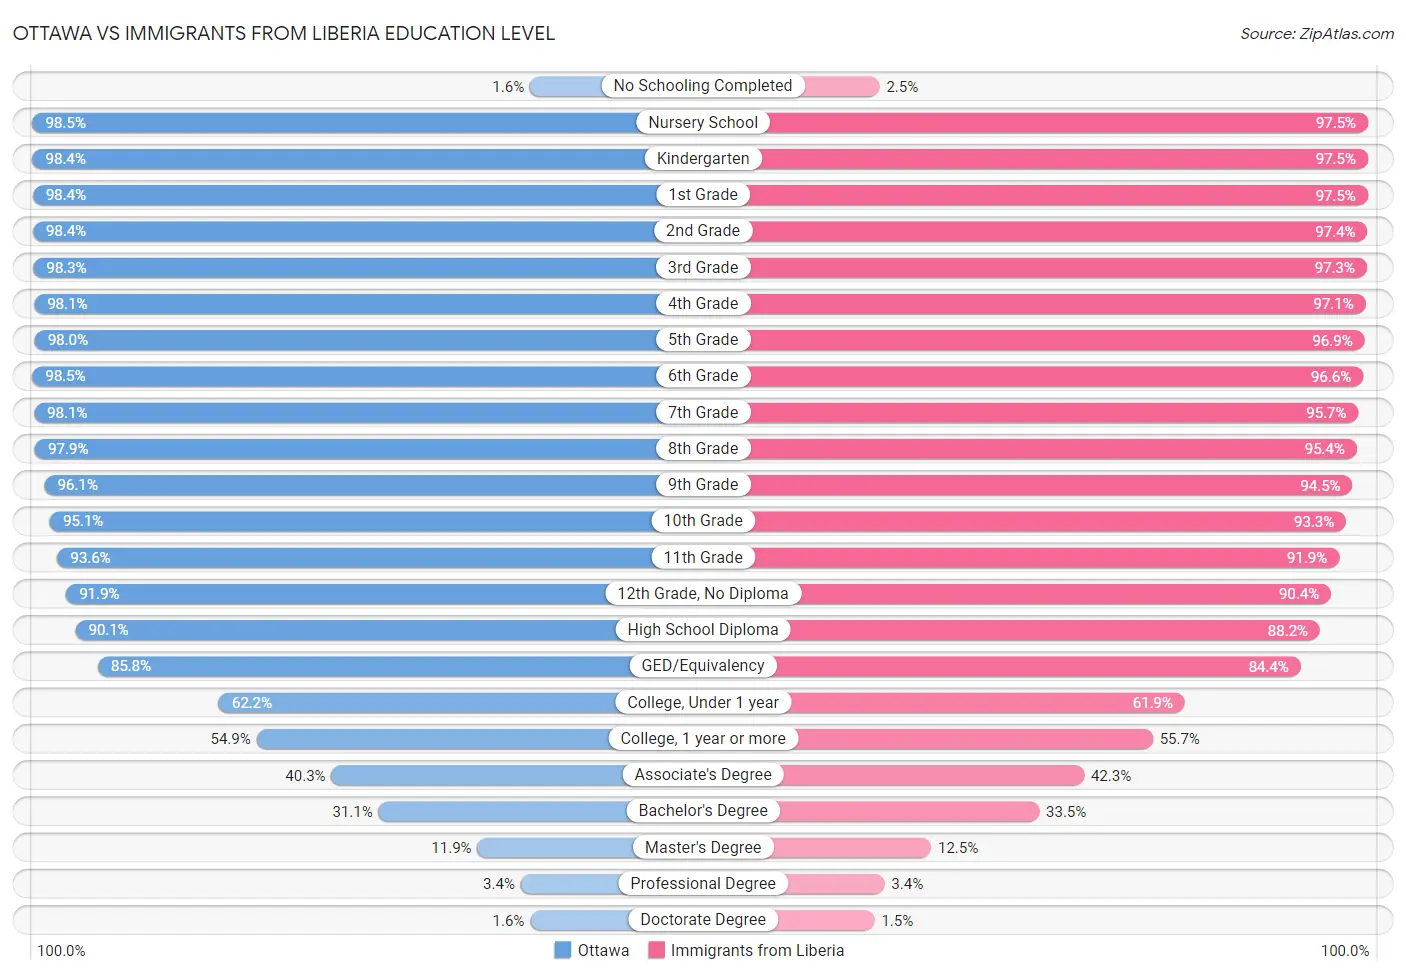 Ottawa vs Immigrants from Liberia Education Level